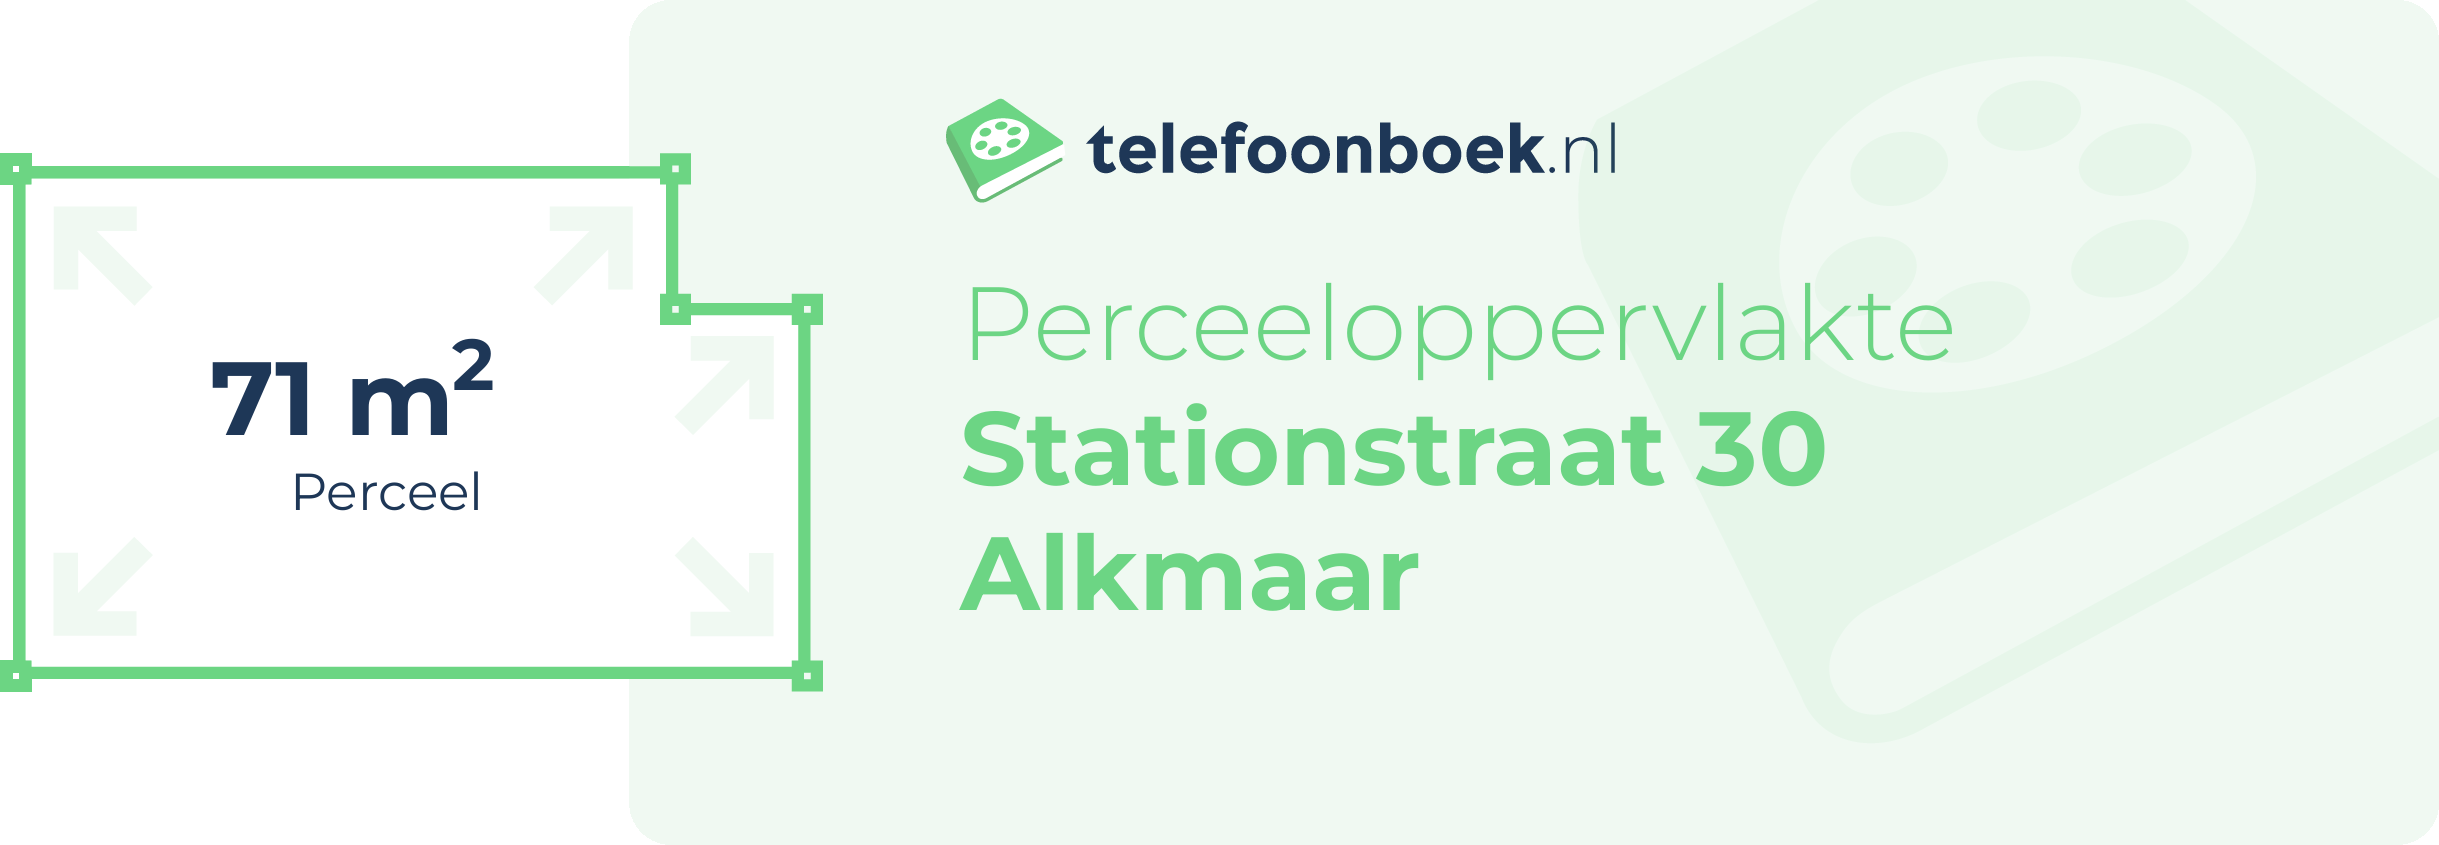 Perceeloppervlakte Stationstraat 30 Alkmaar